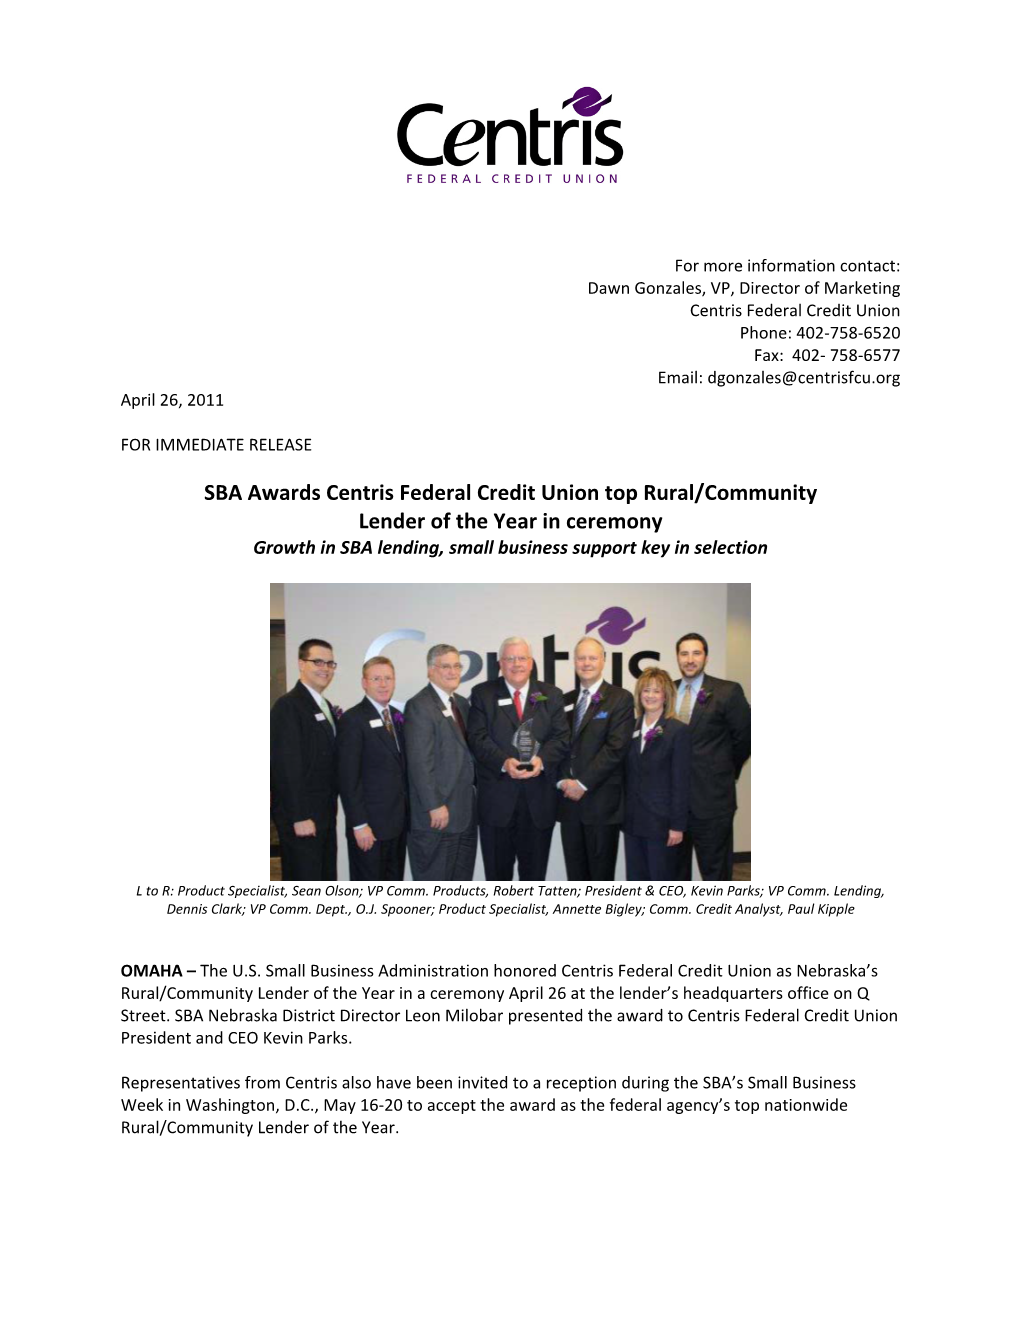 SBA Awards Centris Top Rural-Community Lender of the Year